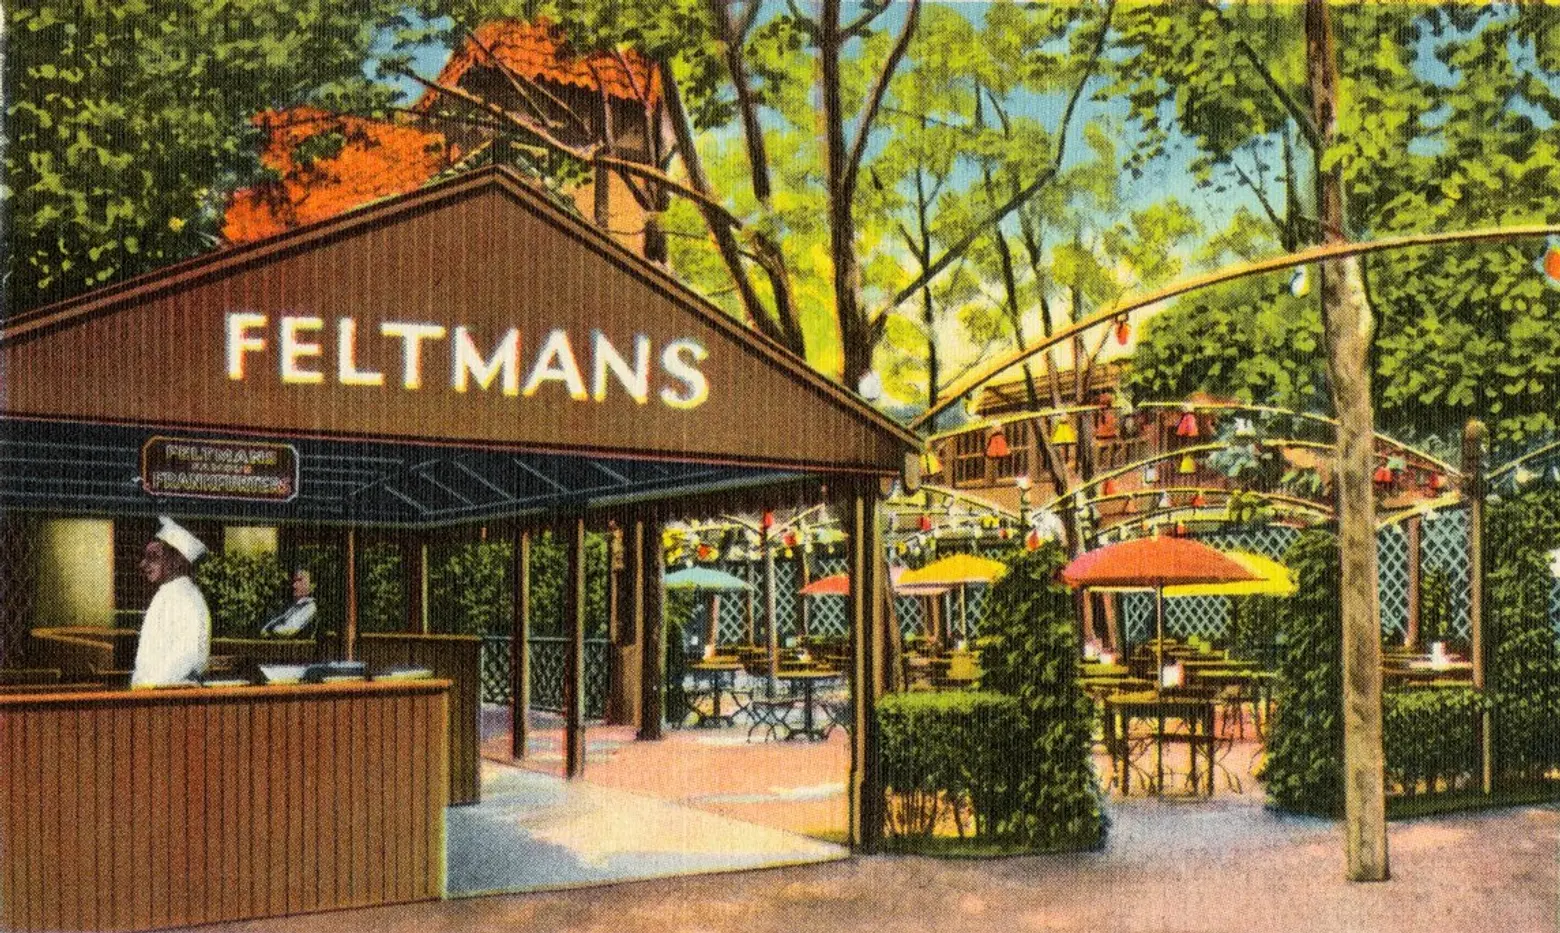 Feltman's Coney Island, Coney Island hot dogs, Coney Island red hots, hot dog history, Charles Feltman